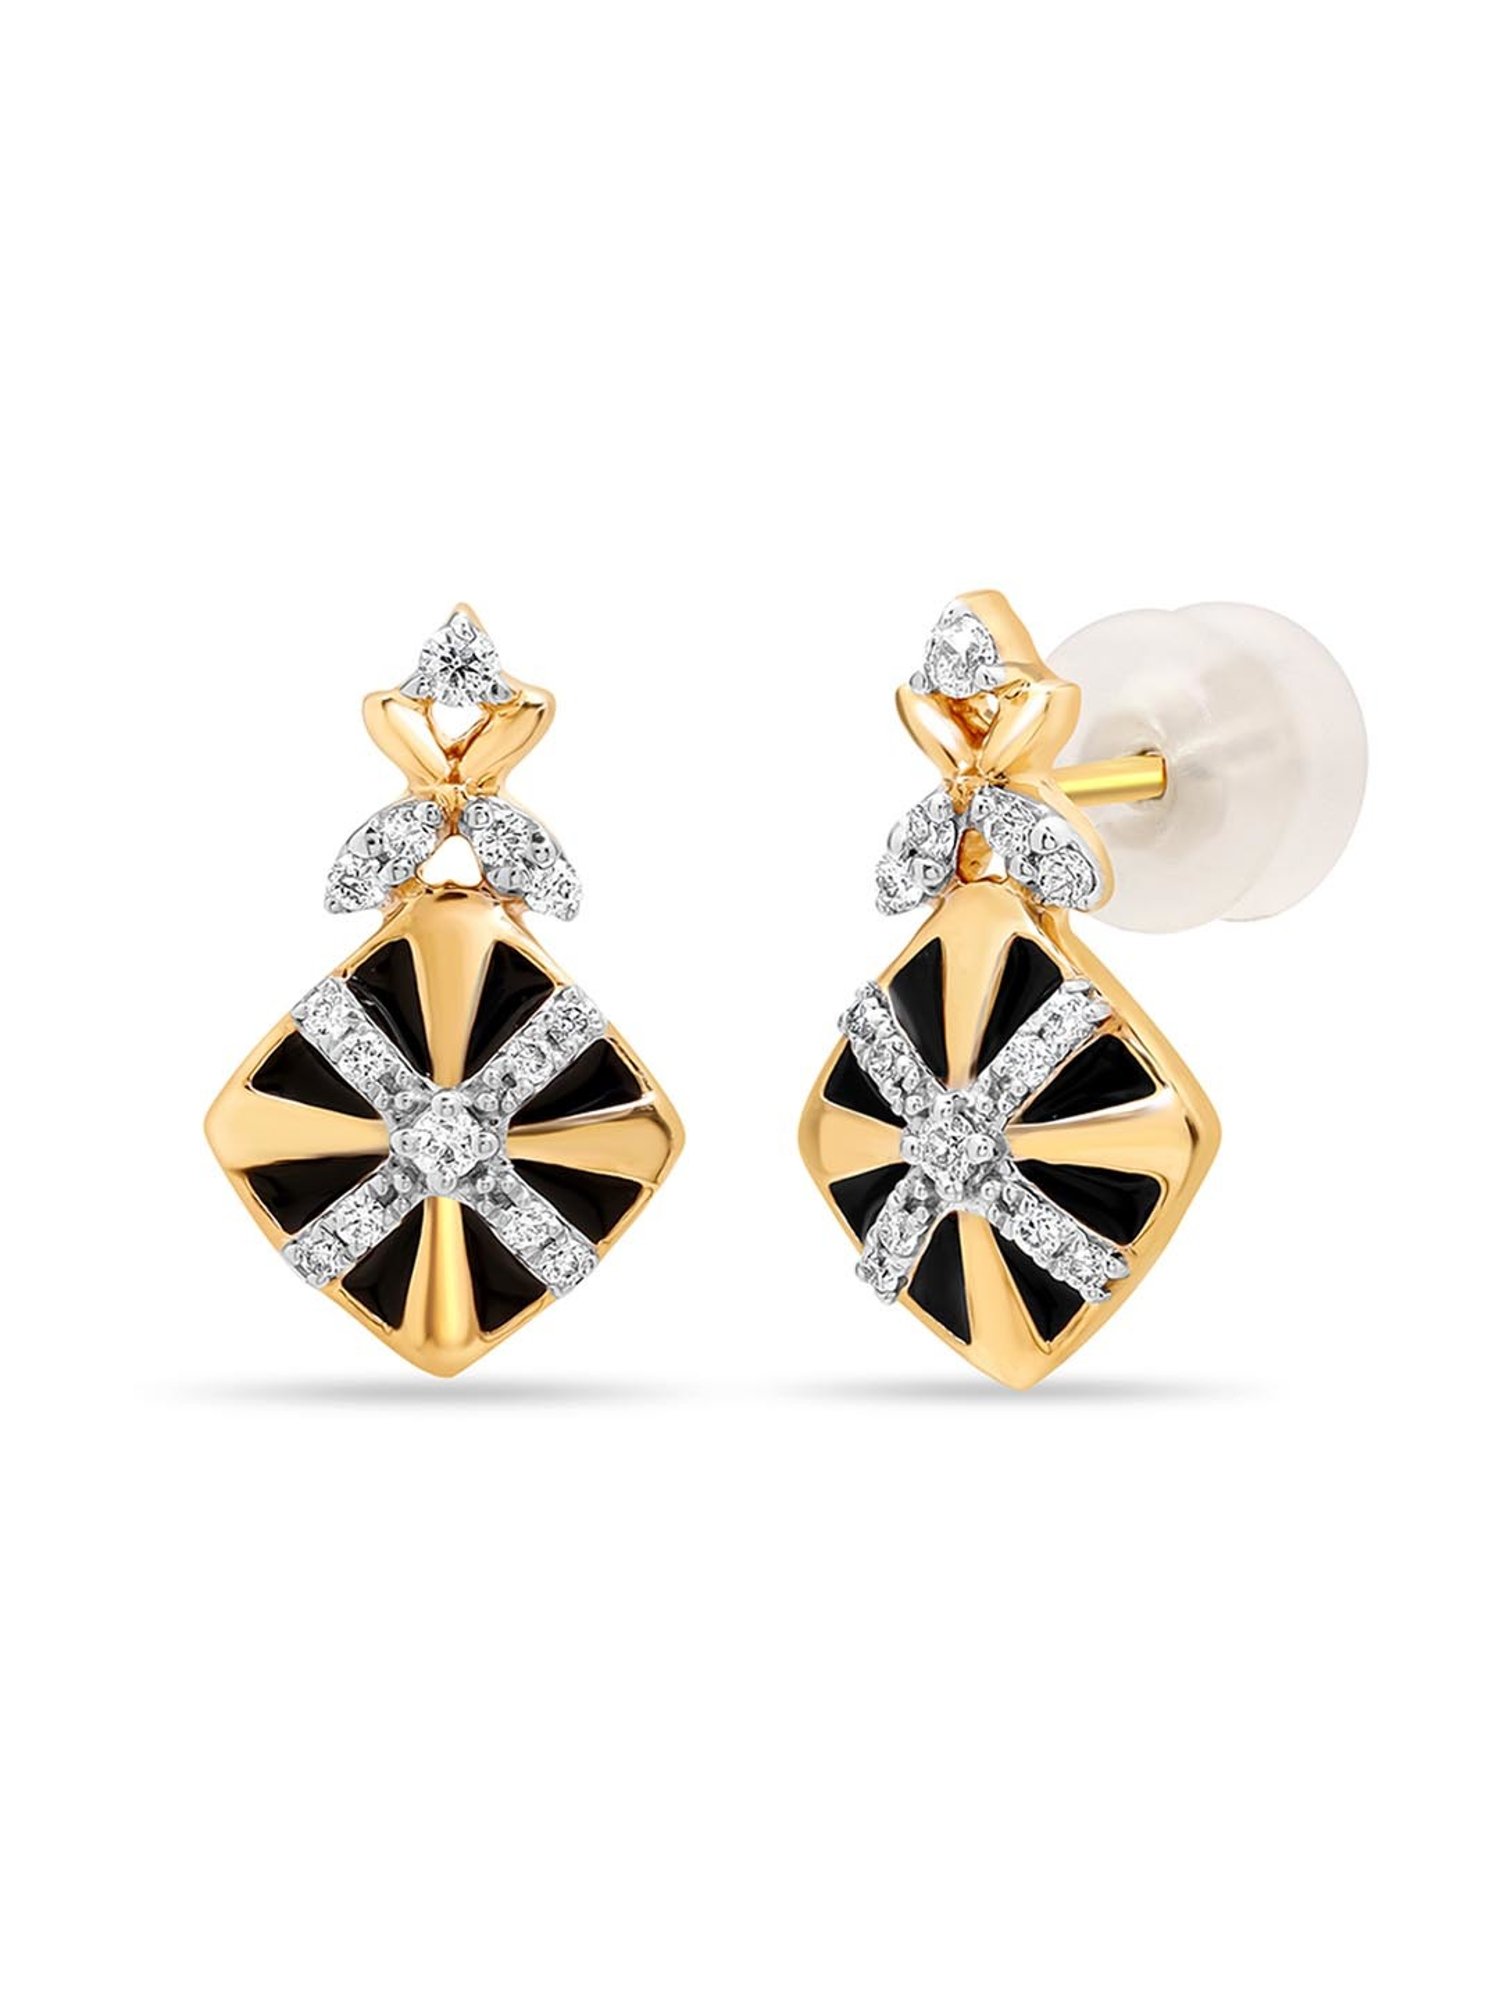 Buy TANISHQ 18KT Gold and Diamond Stud Earrings Online - Best Price TANISHQ  18KT Gold and Diamond Stud Earrings - Justdial Shop Online.